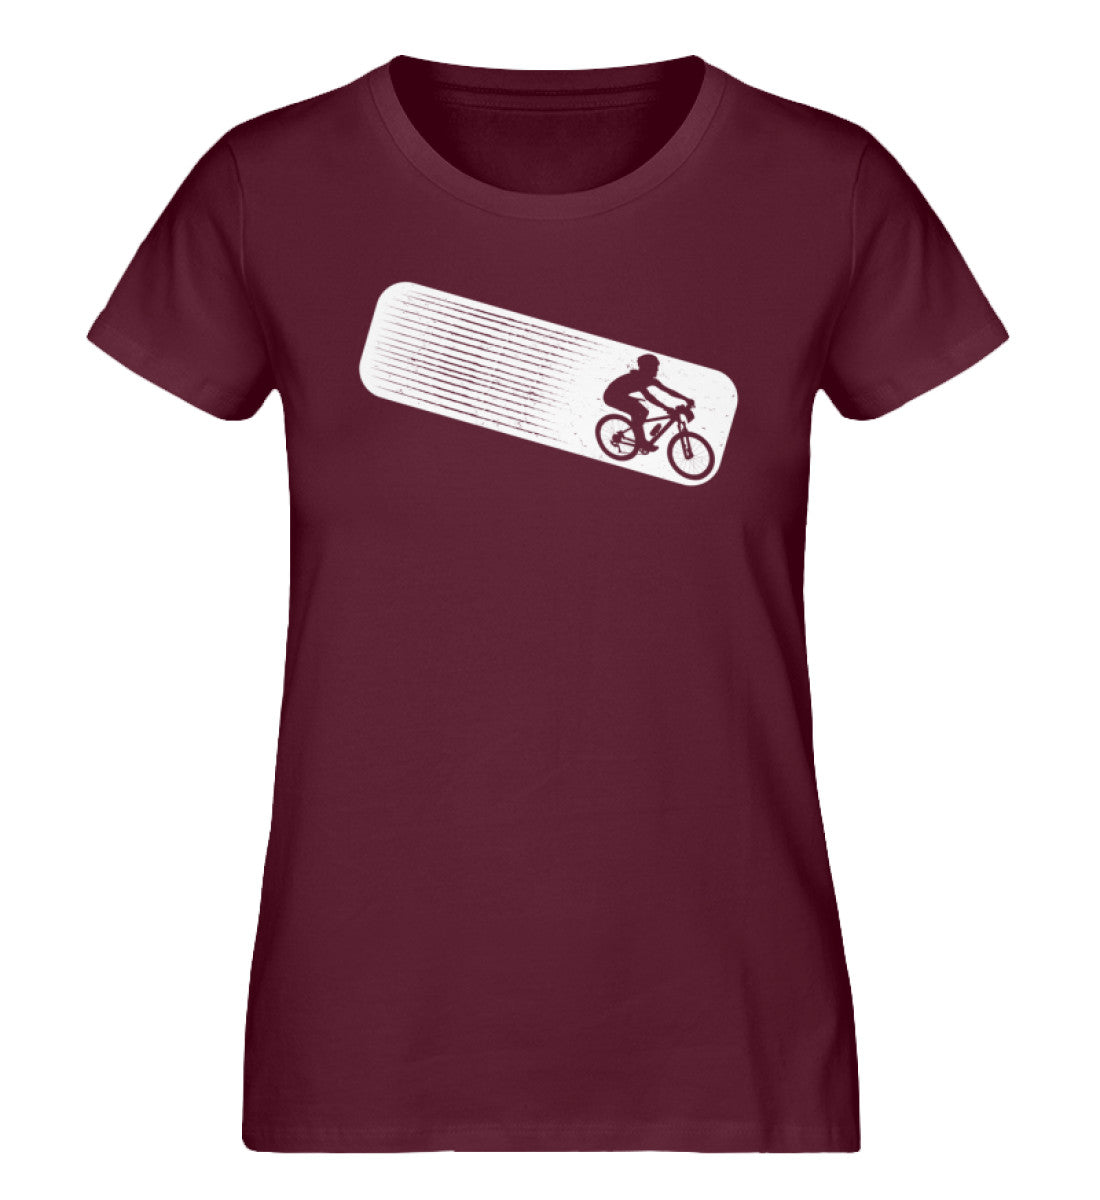 Vintage Radfahrer - Damen Organic T-Shirt fahrrad mountainbike Weinrot